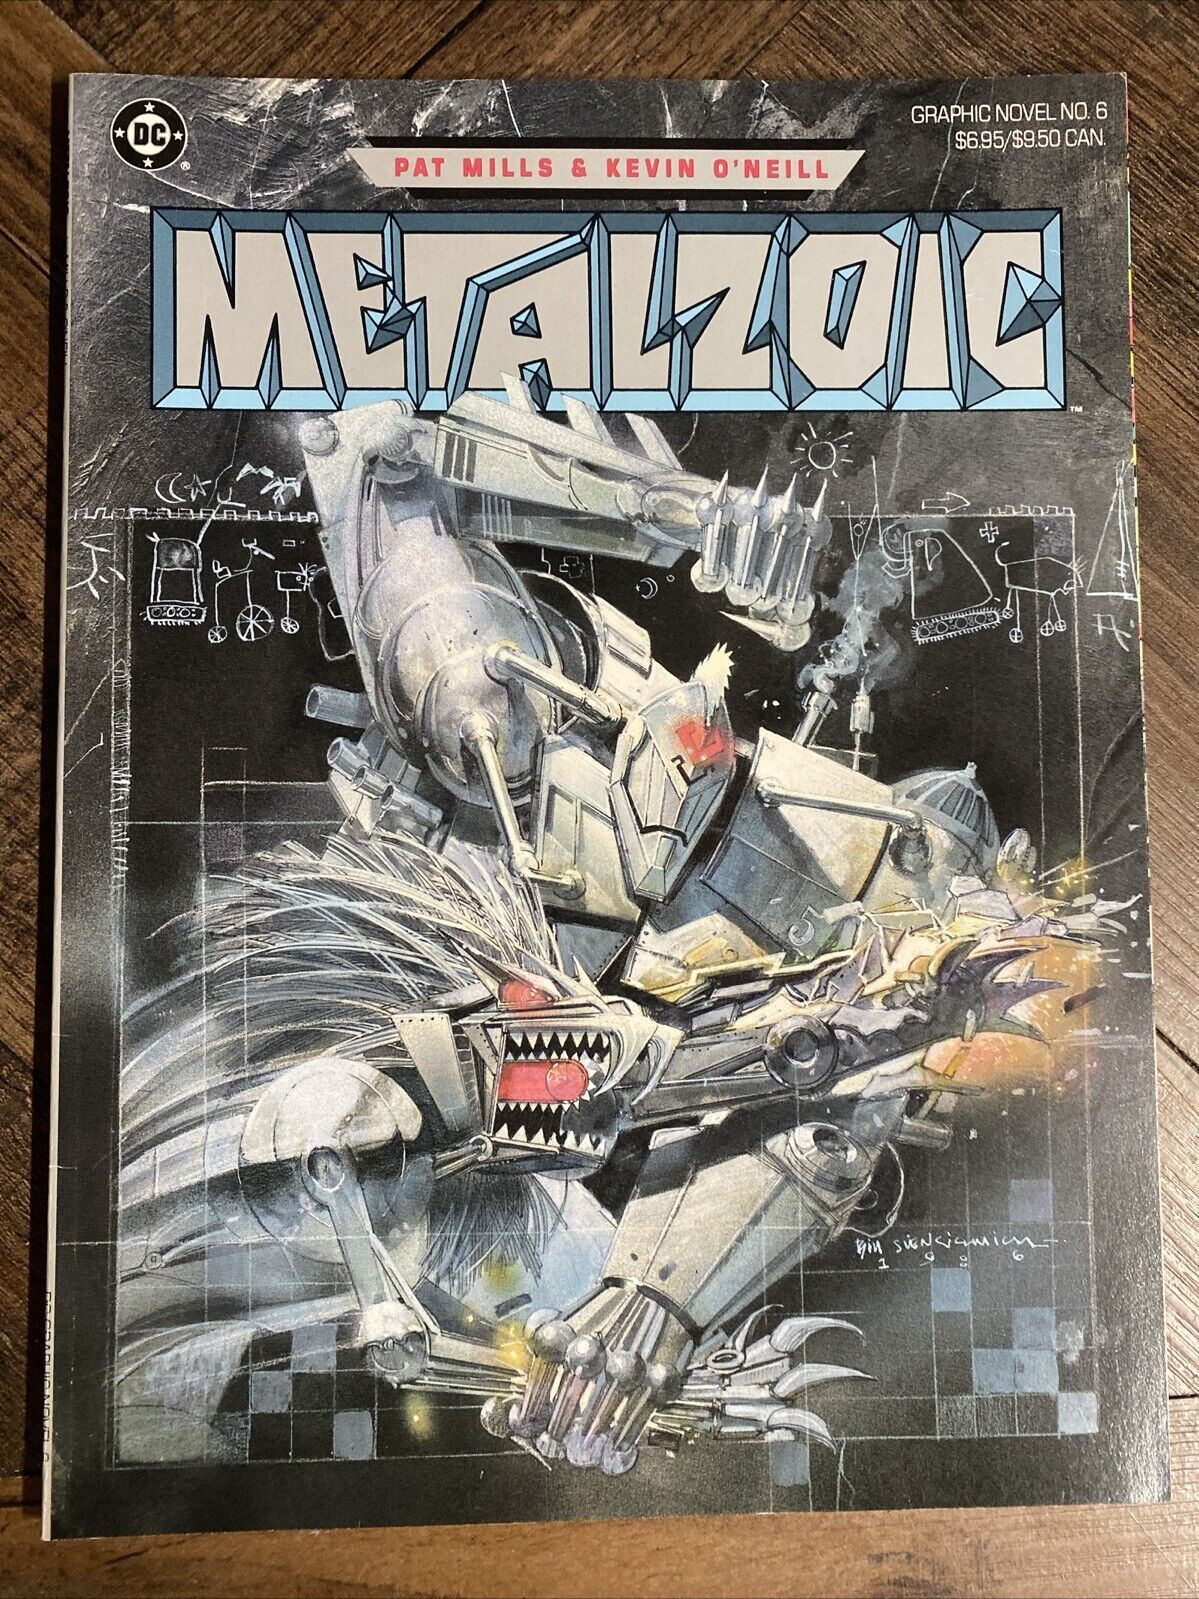 Vintage 1986 Metalzoic Graphic Novel #6 DC Pat Mills Kevin O\'Neill 1st Print